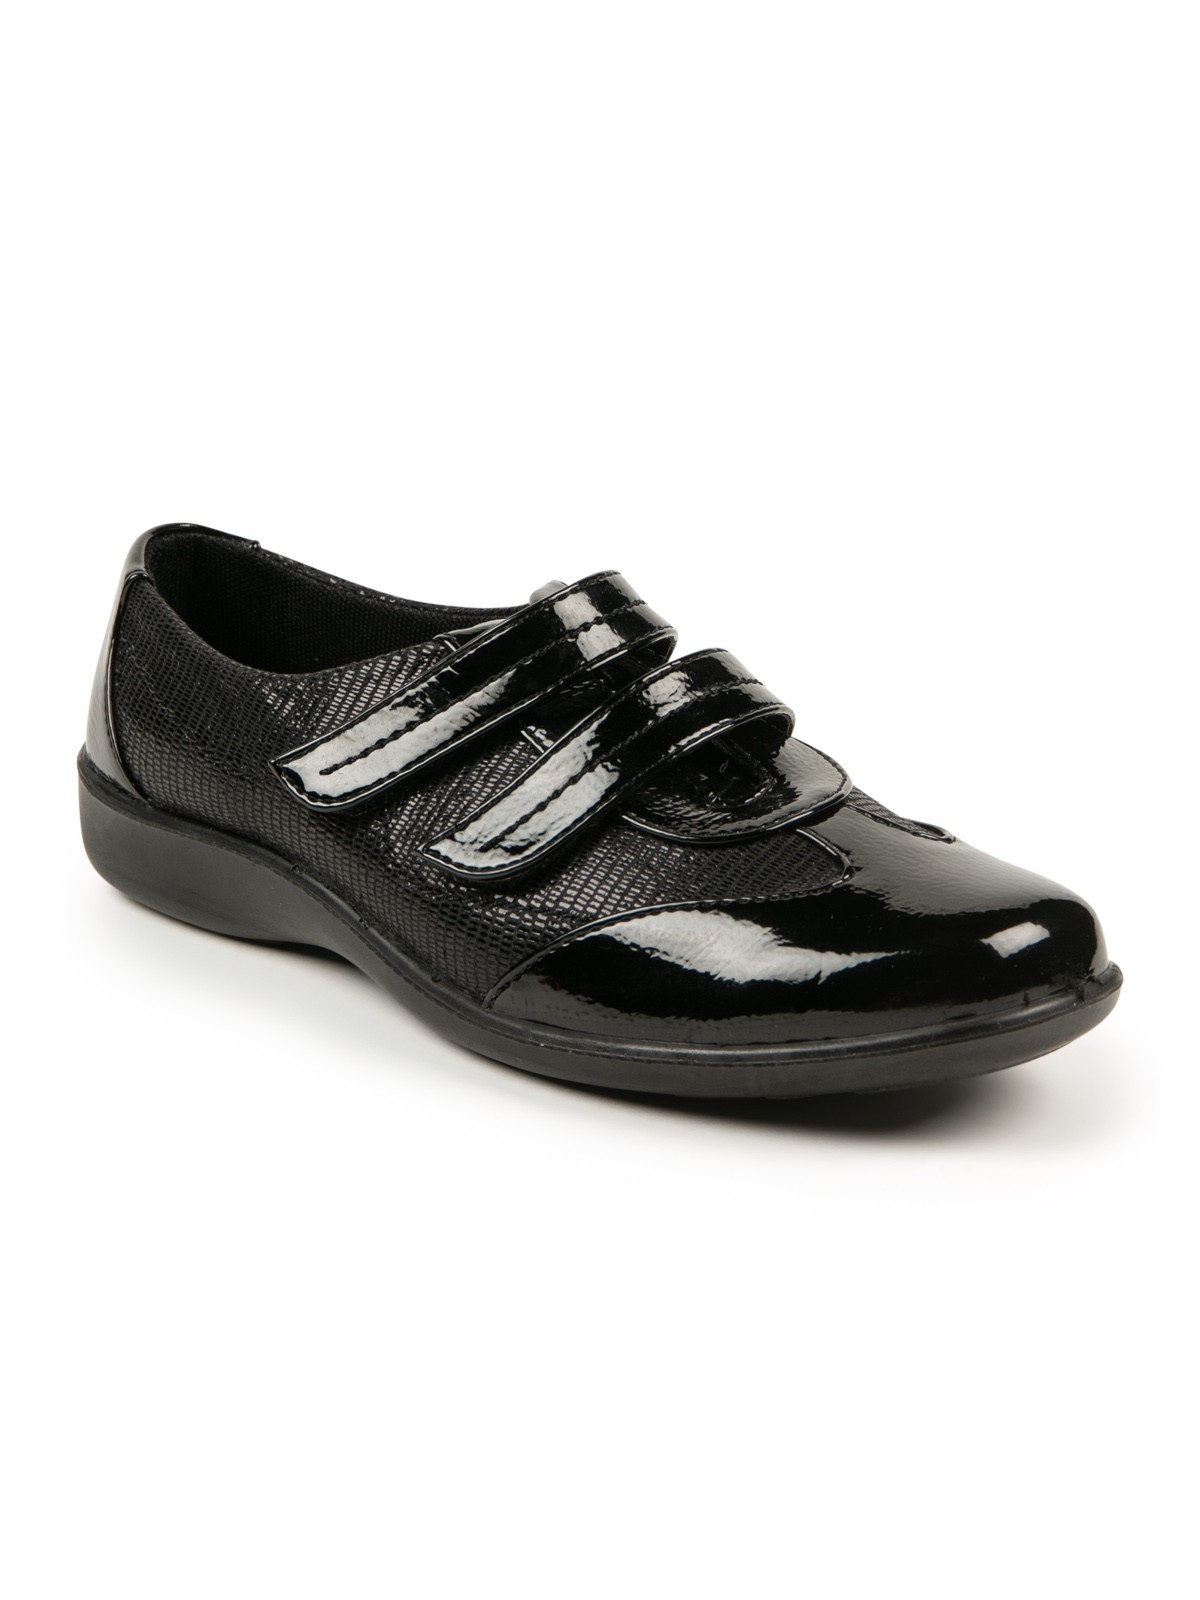 Chaussures confort femme (36-41) - DistriCenter